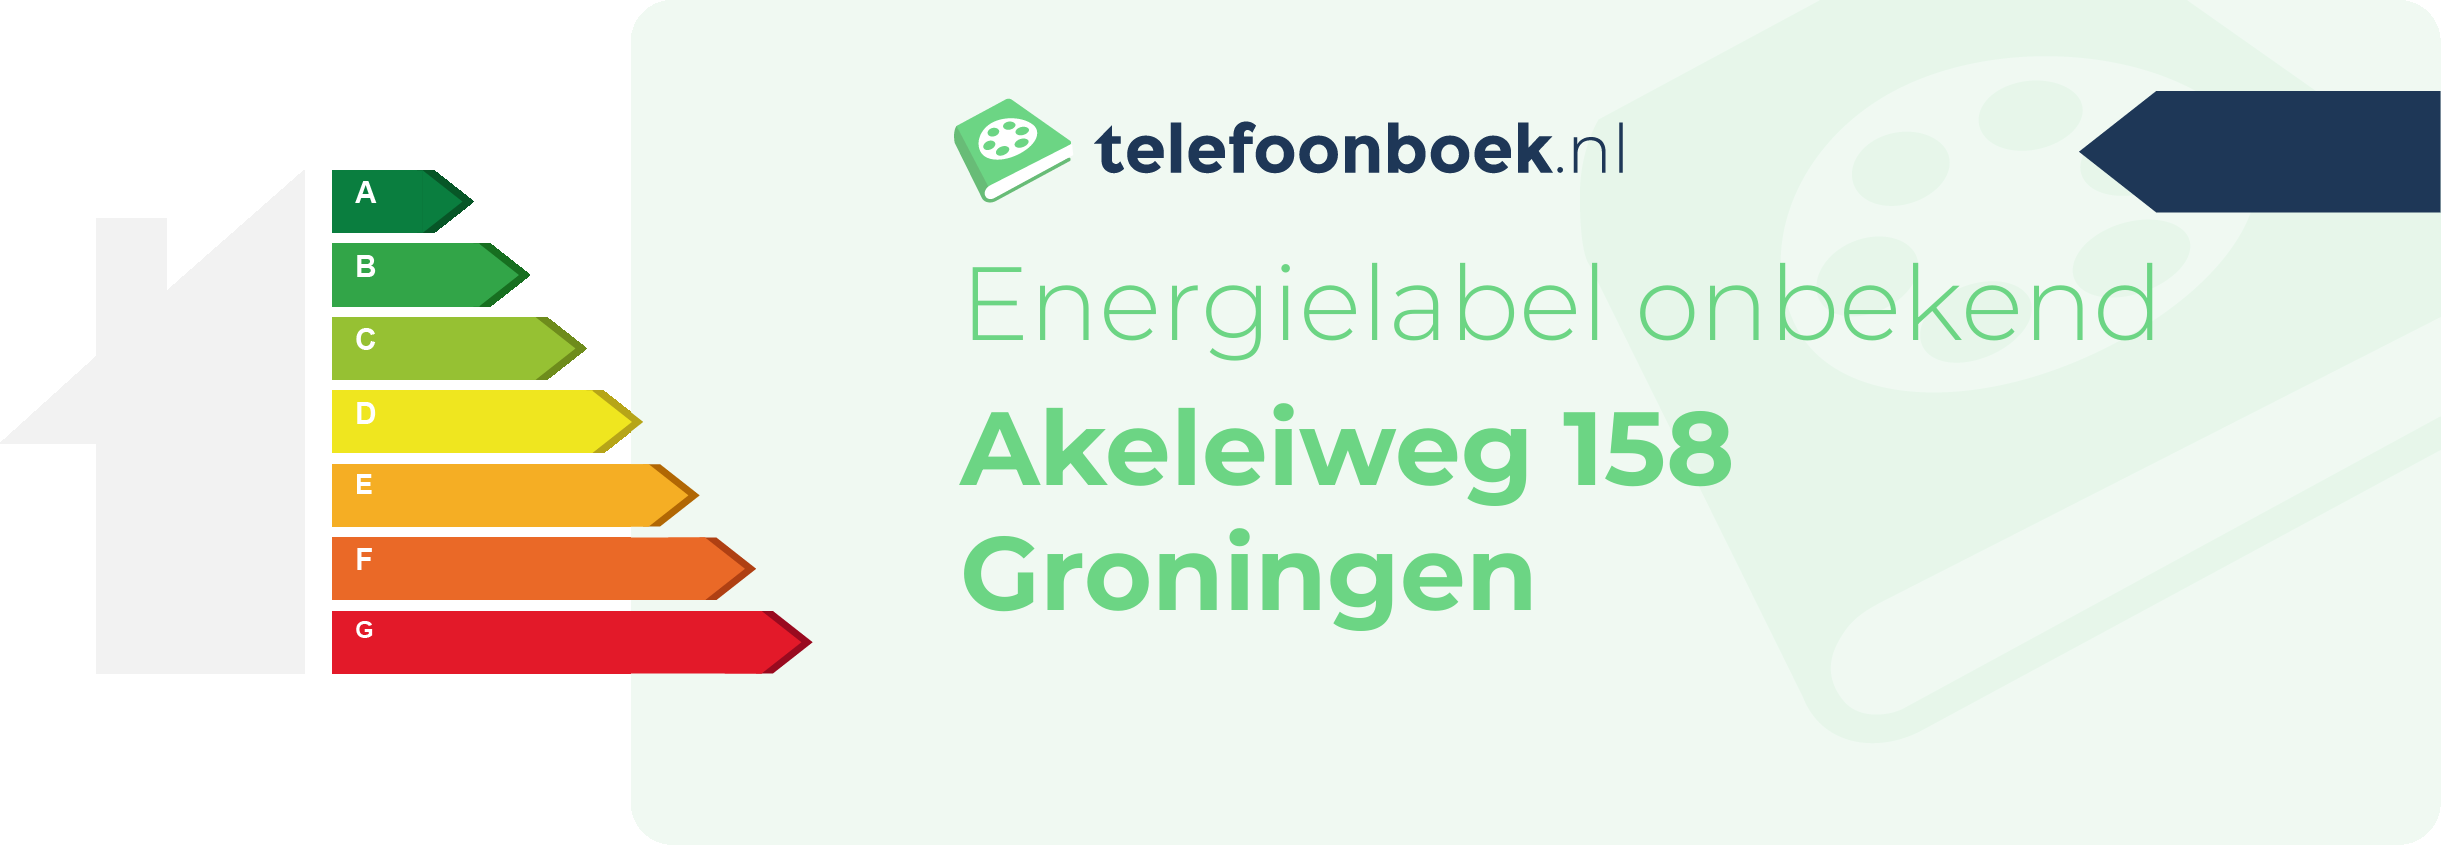 Energielabel Akeleiweg 158 Groningen